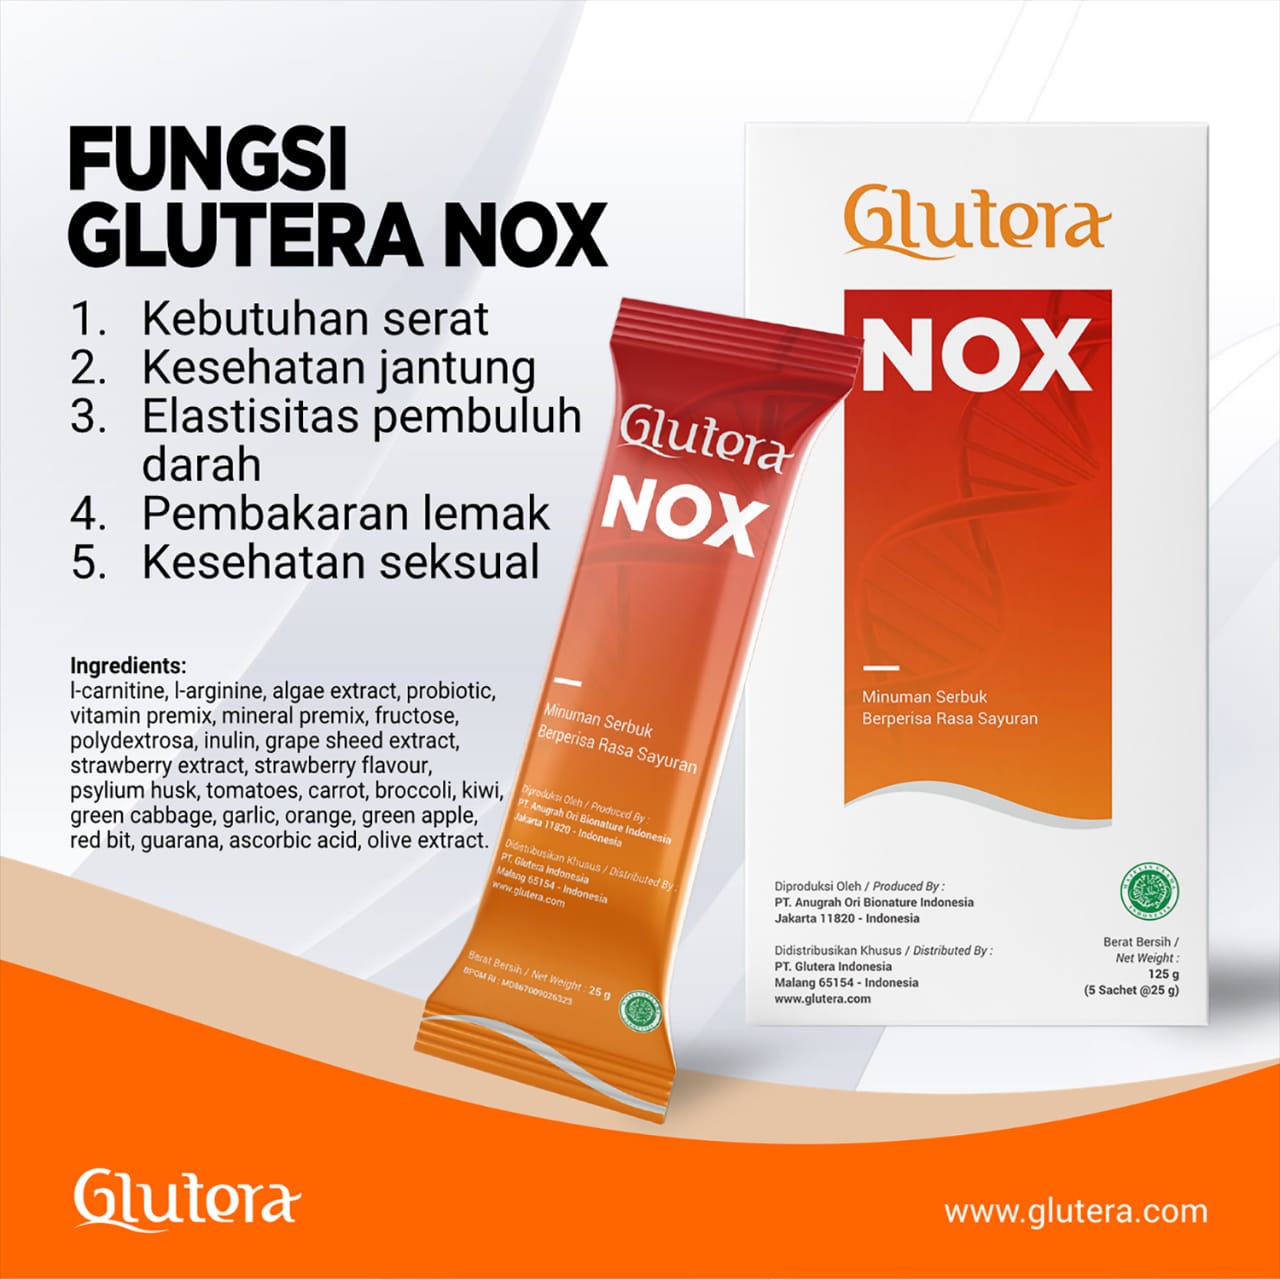 Fungsi-Glutera-Nox.jpg